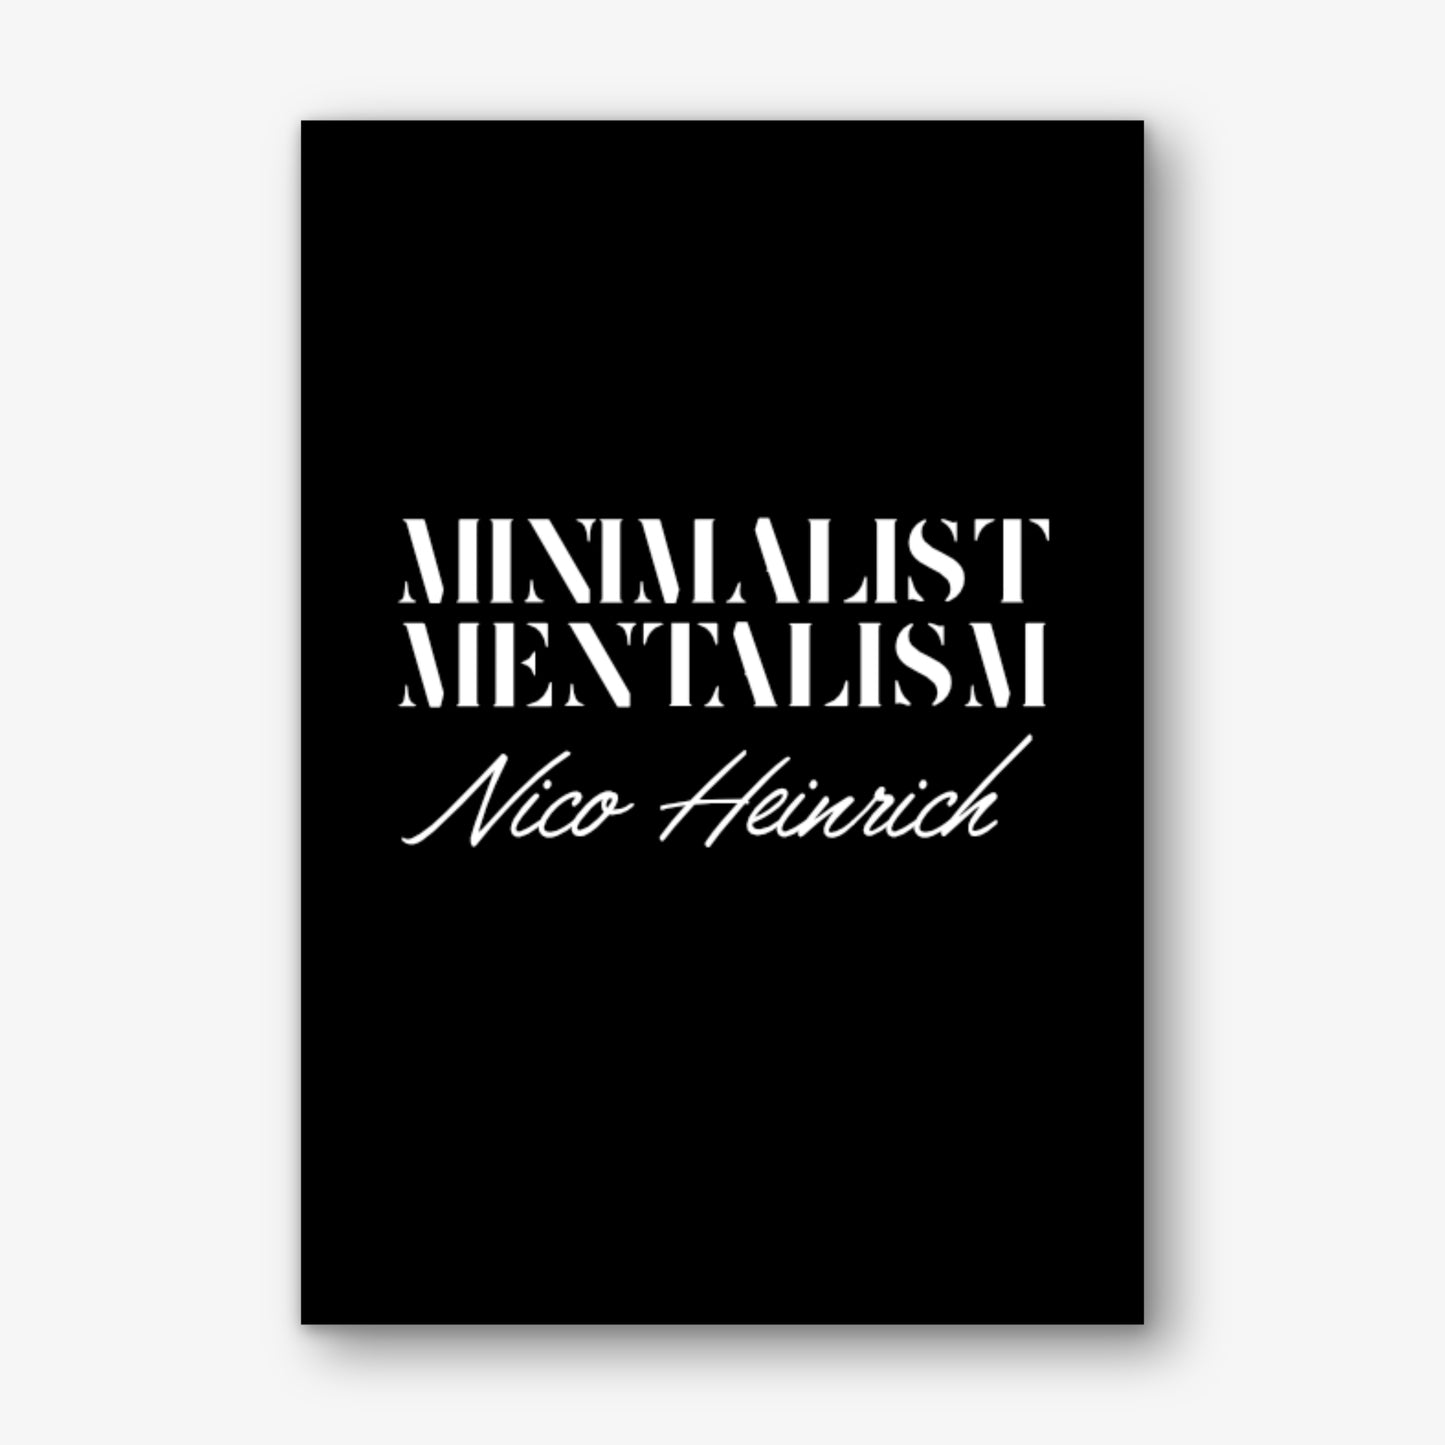 Minimalist Mentalism Bundle